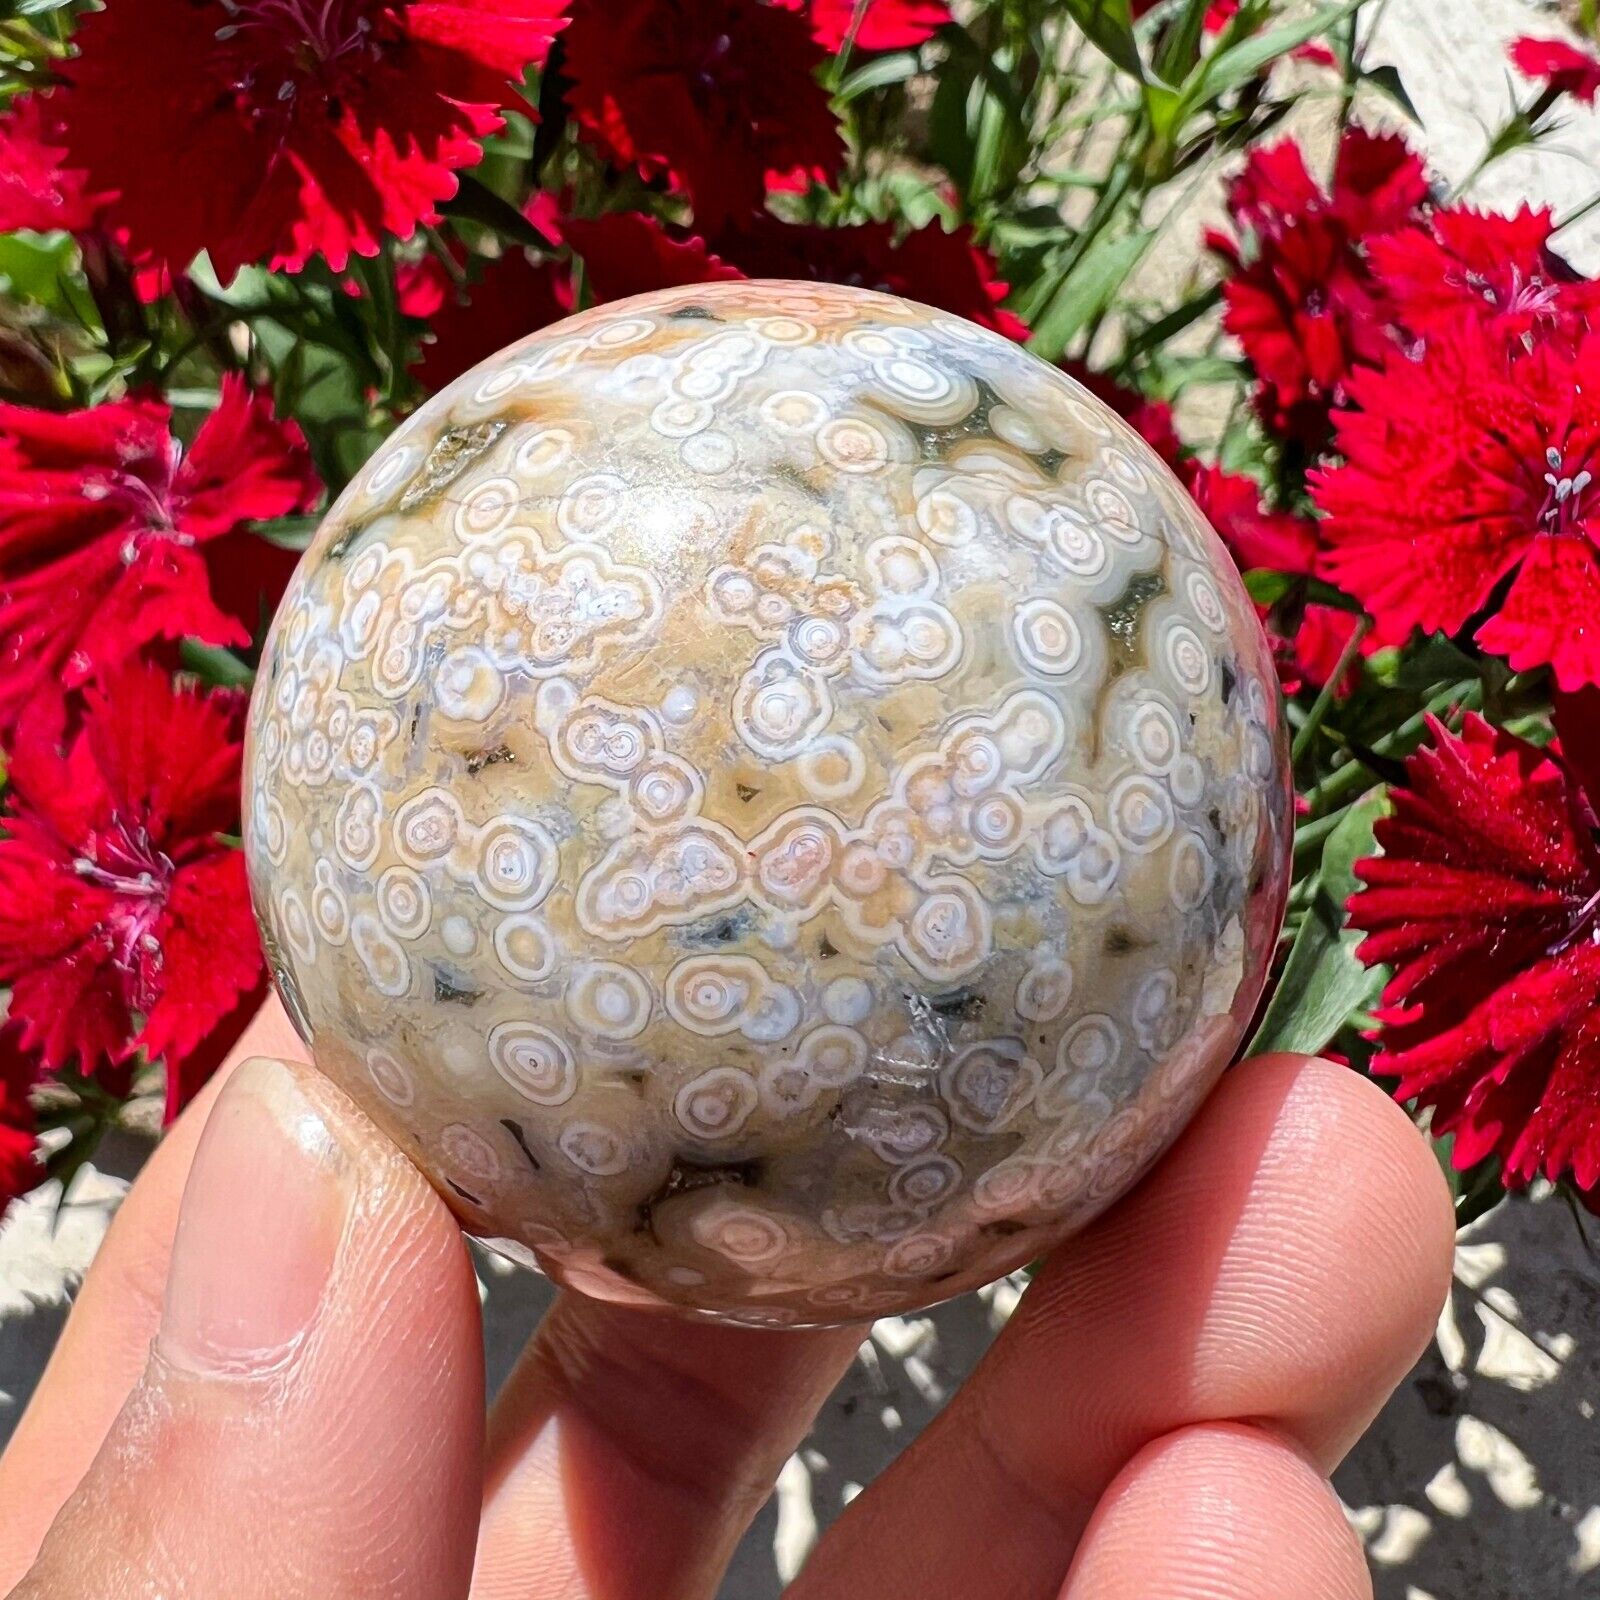 182g Rare Natural 8th Vein Ocean Jasper Sphere Quartz Crystal Ball Reiki Stone